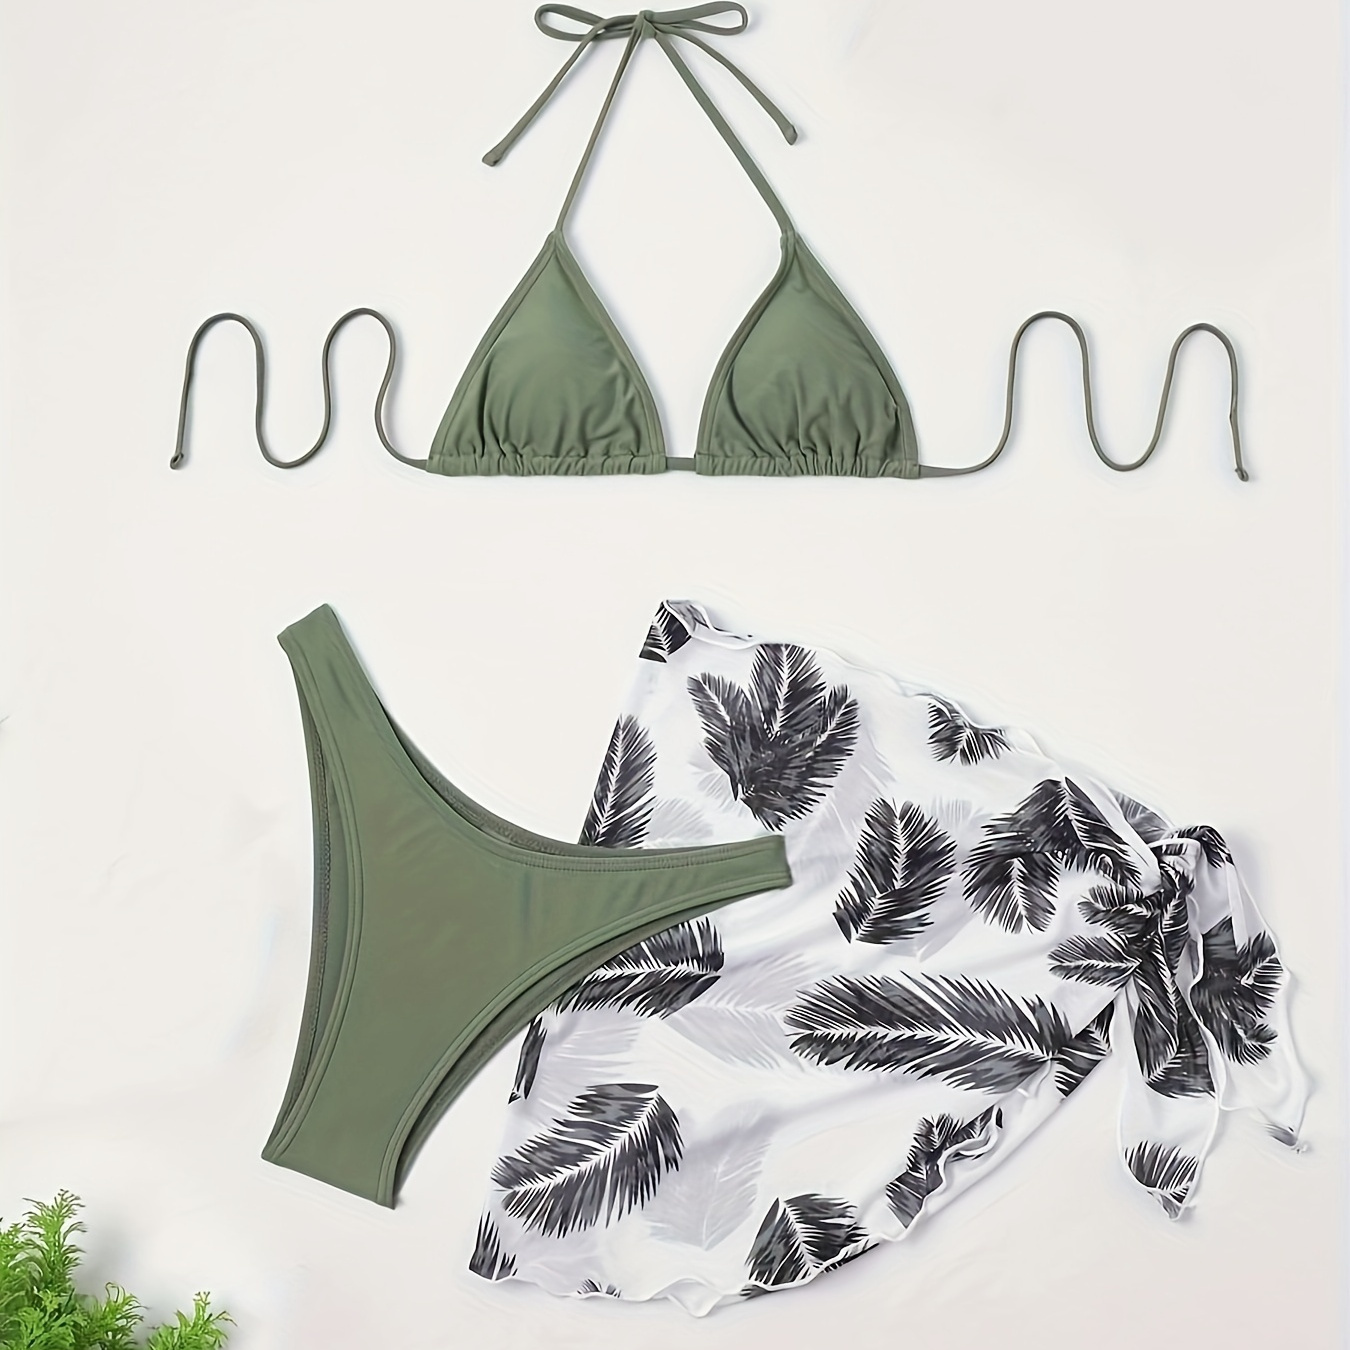 

Women's Solid Color Bikini And Printed Sheer Sarong 3-piece Set, Halter Neck, Summer Beachwear, Quick-dry Swimwear